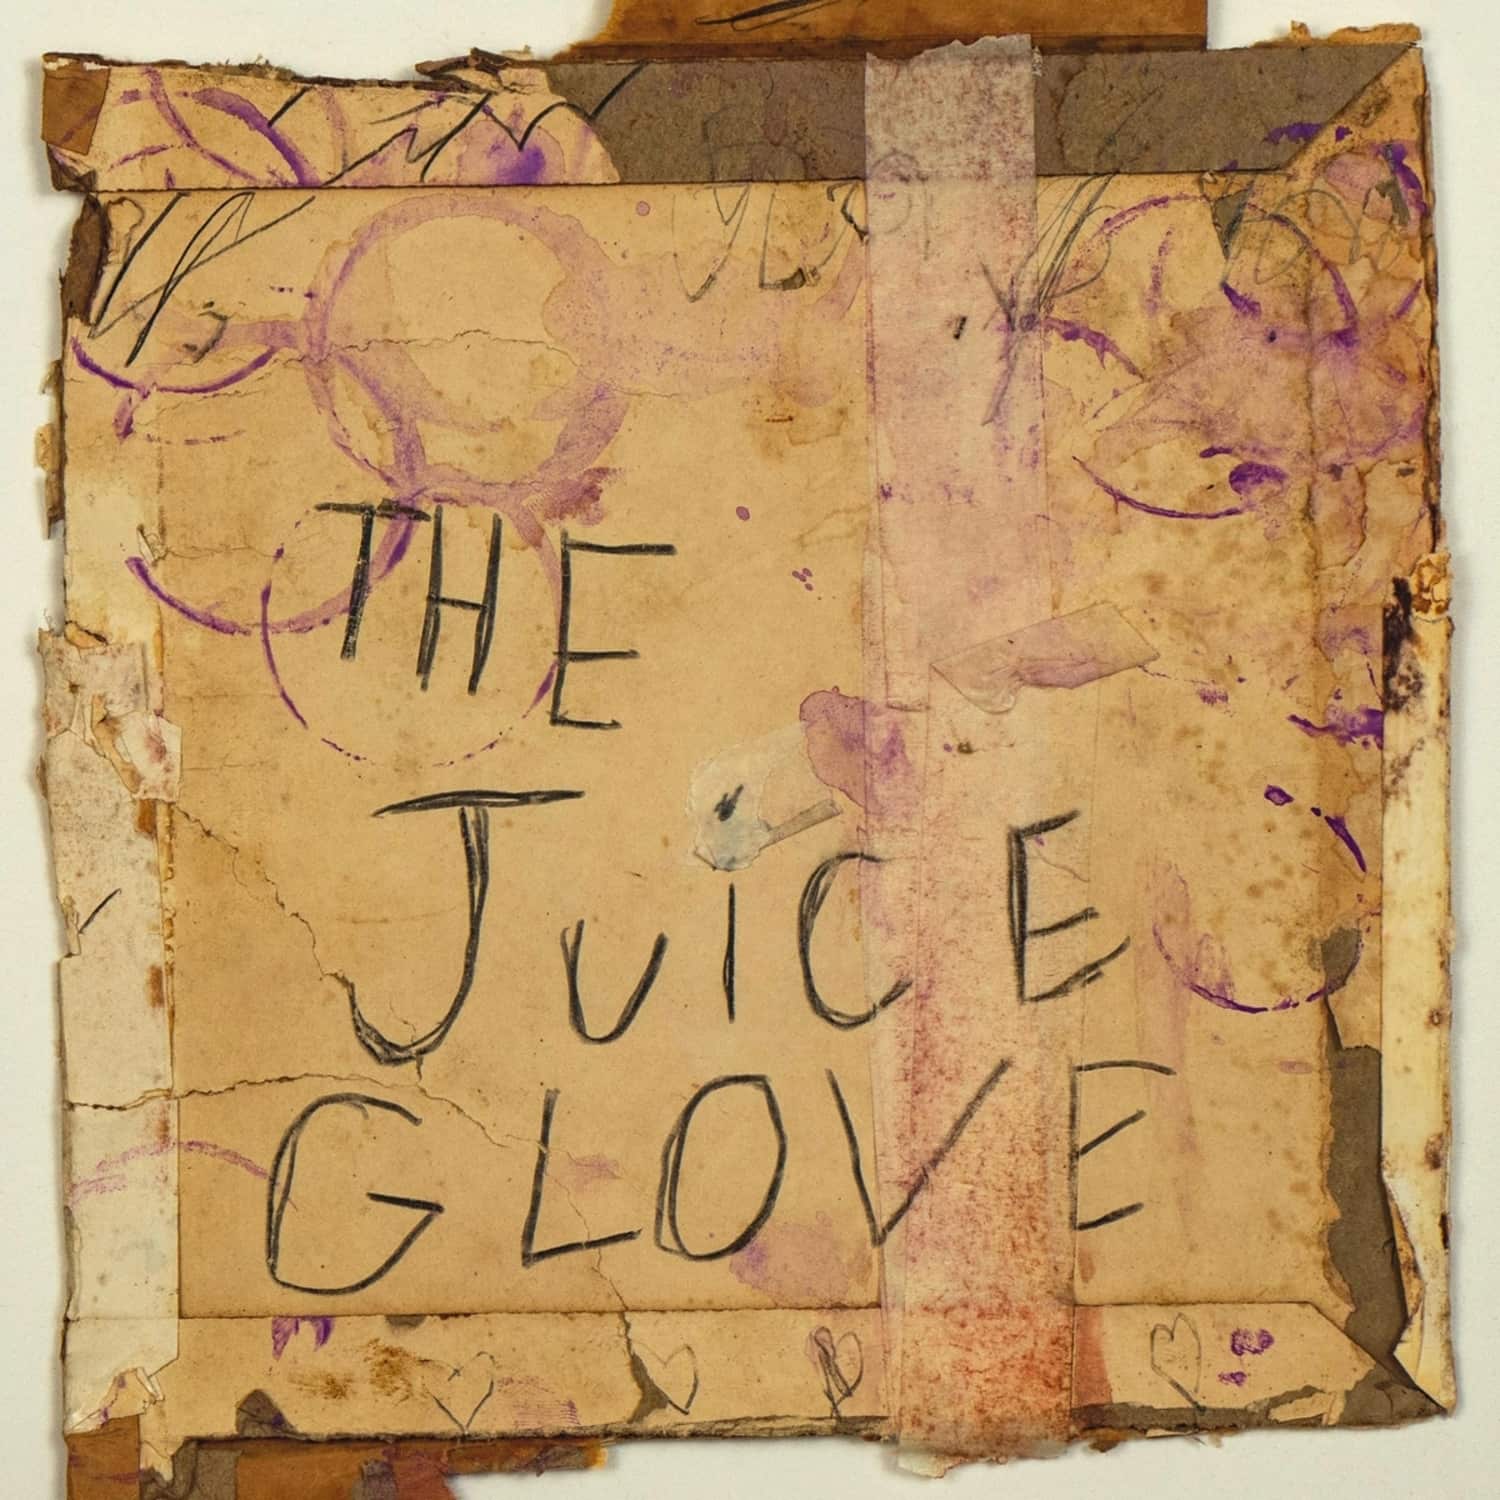 G.Love & Special Sauce - JUICE 